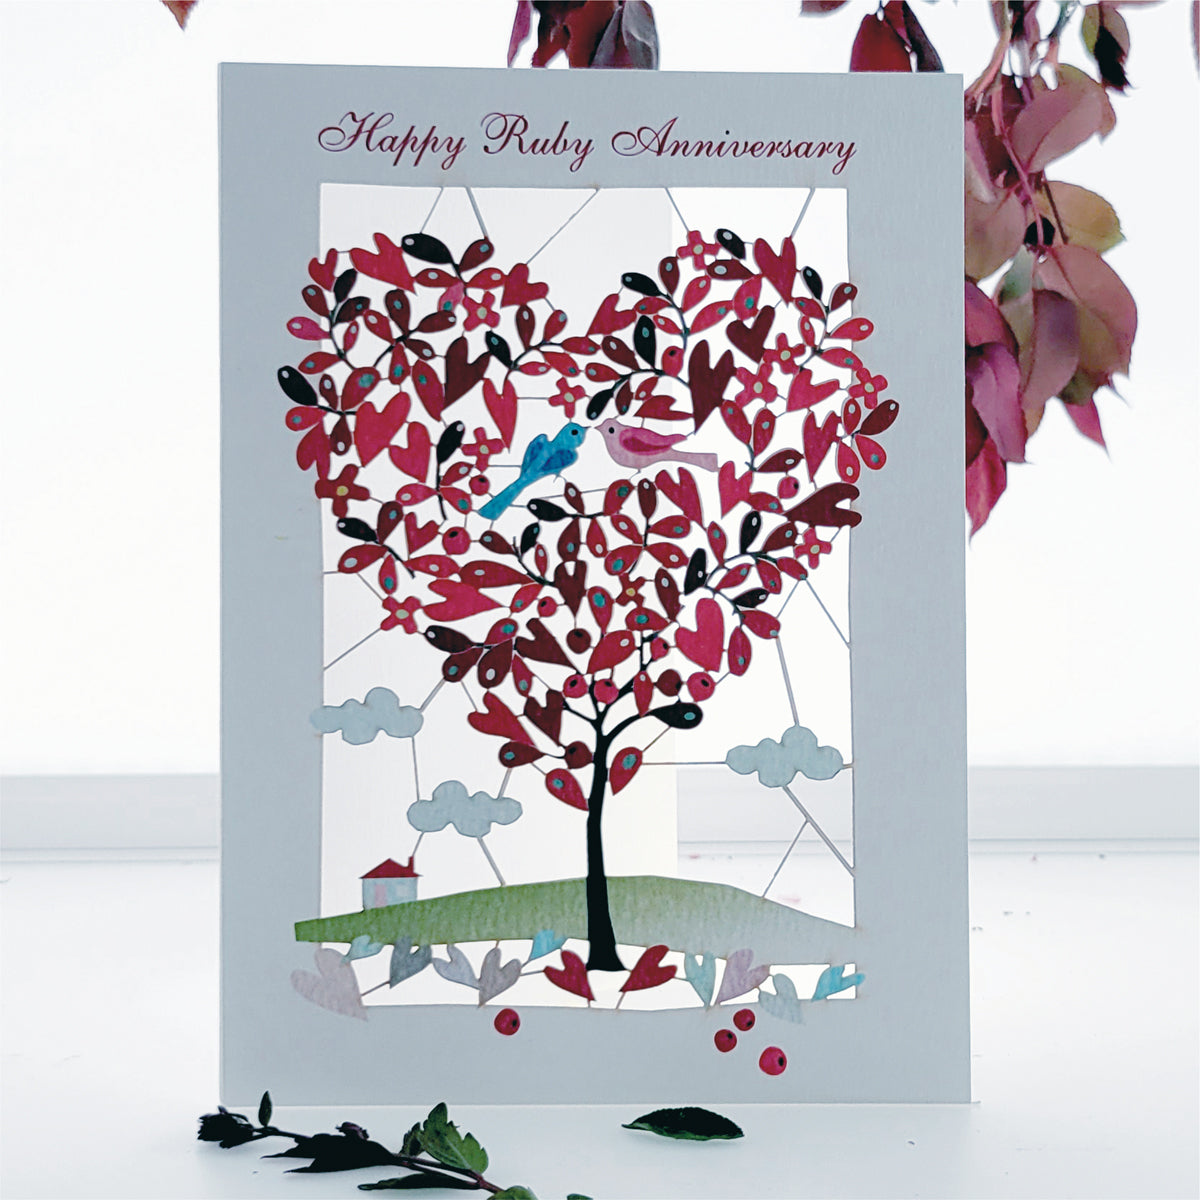 ''Happy Ruby Anniversary'' - Love Birds in Tree - 40th Anniversary Card, #PM-110